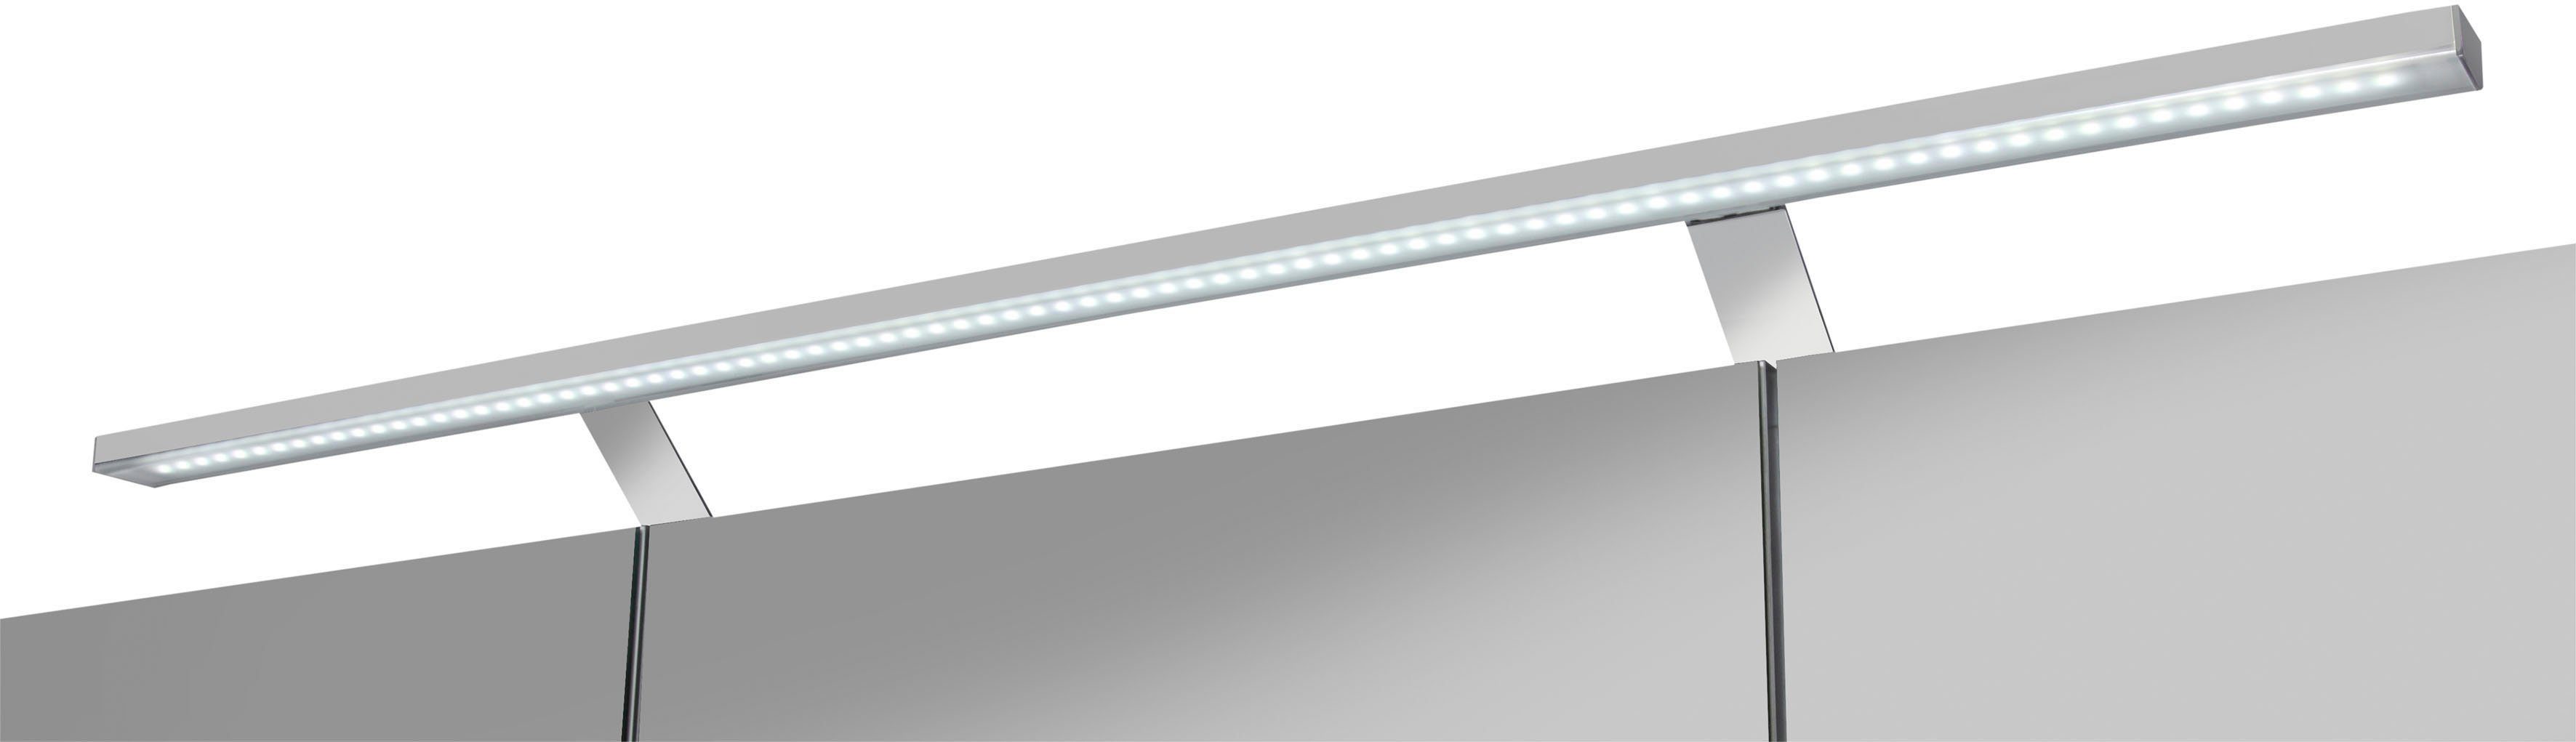 welltime basaltgrau Schalter-/Steckdosenbox Torino Breite LED-Beleuchtung, Spiegelschrank 100 cm, | 3-türig, basaltgrau